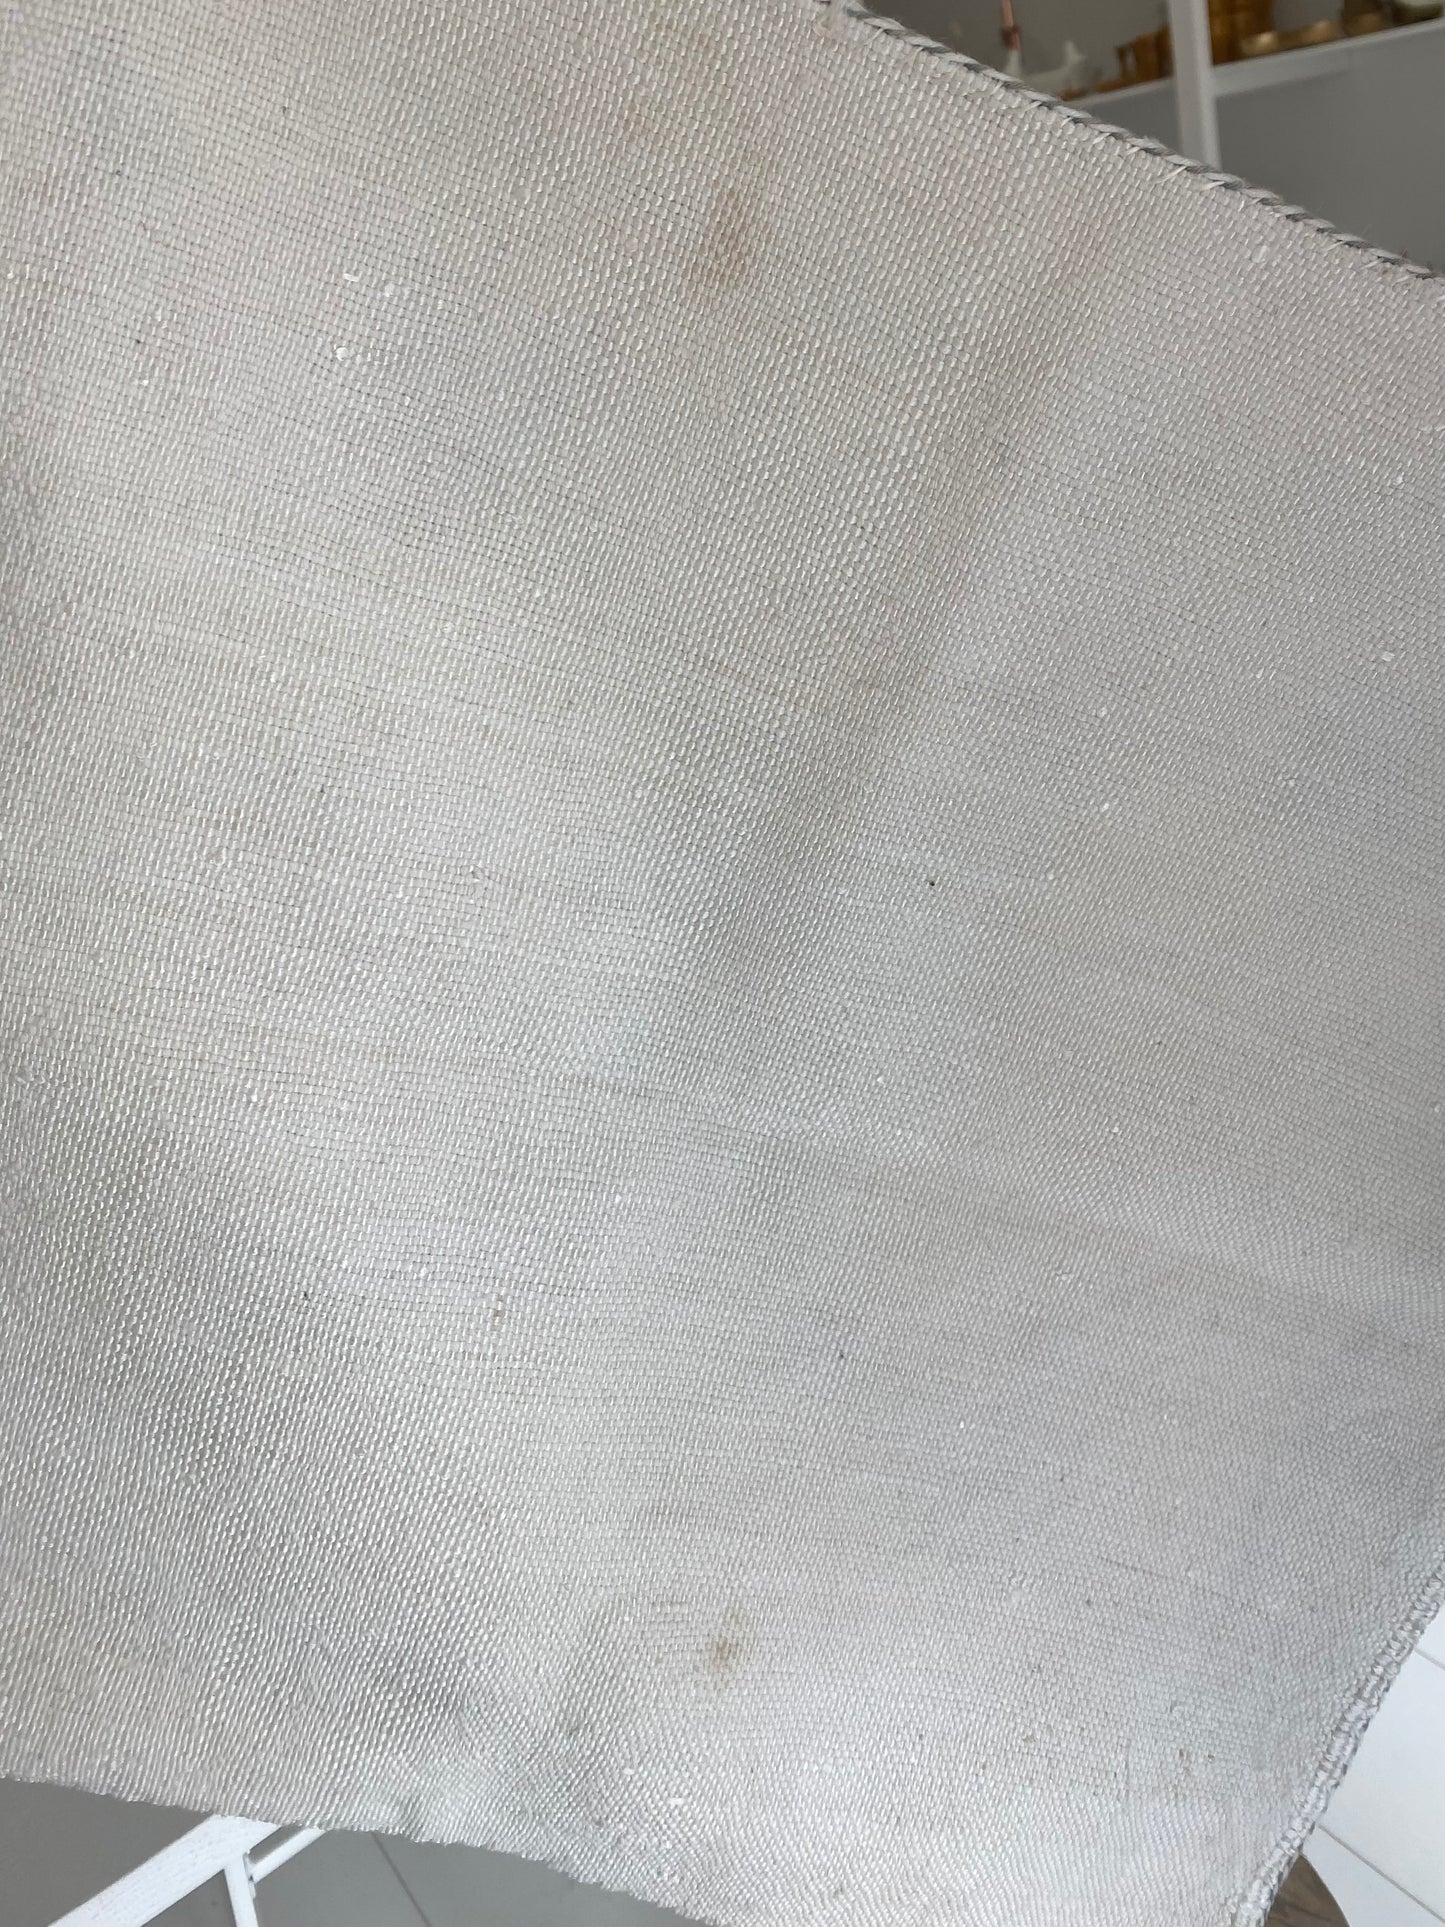 Sabra Silk kussenhoes Off-White met vlekje op achterzijde